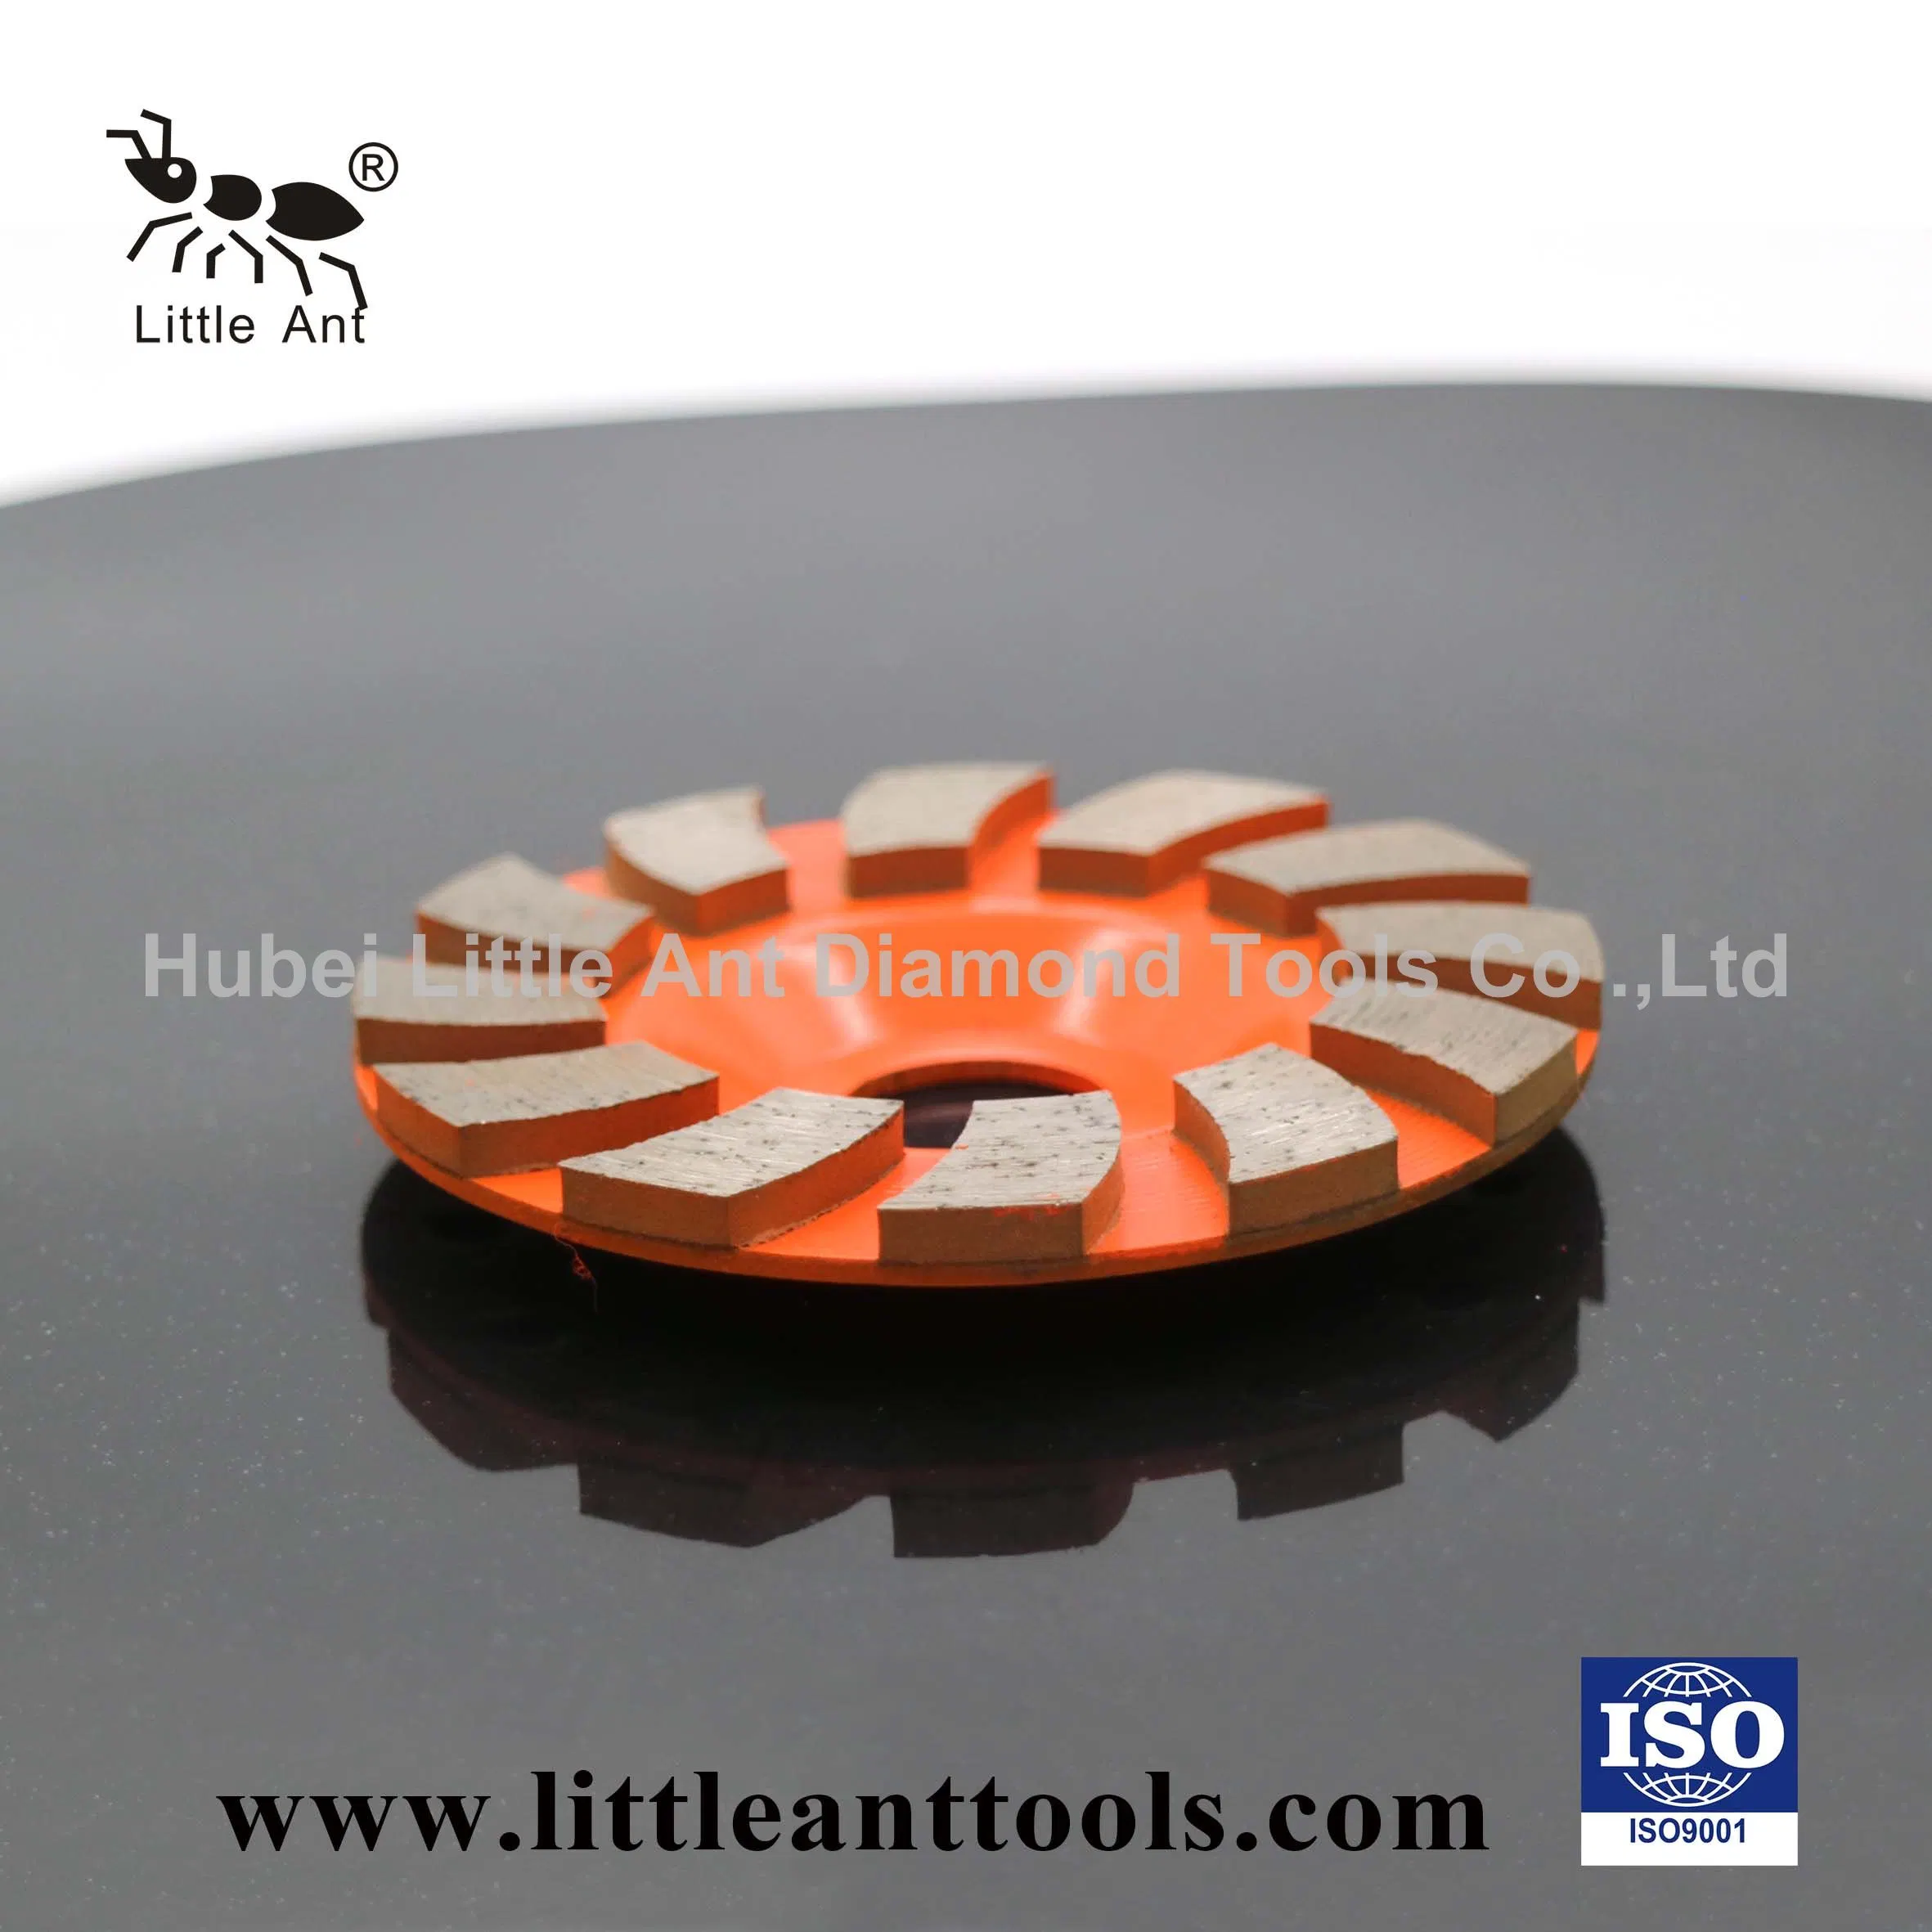 Little Ant Diameter 4 Inch 100mm Diamond Grinding Cup Wheel